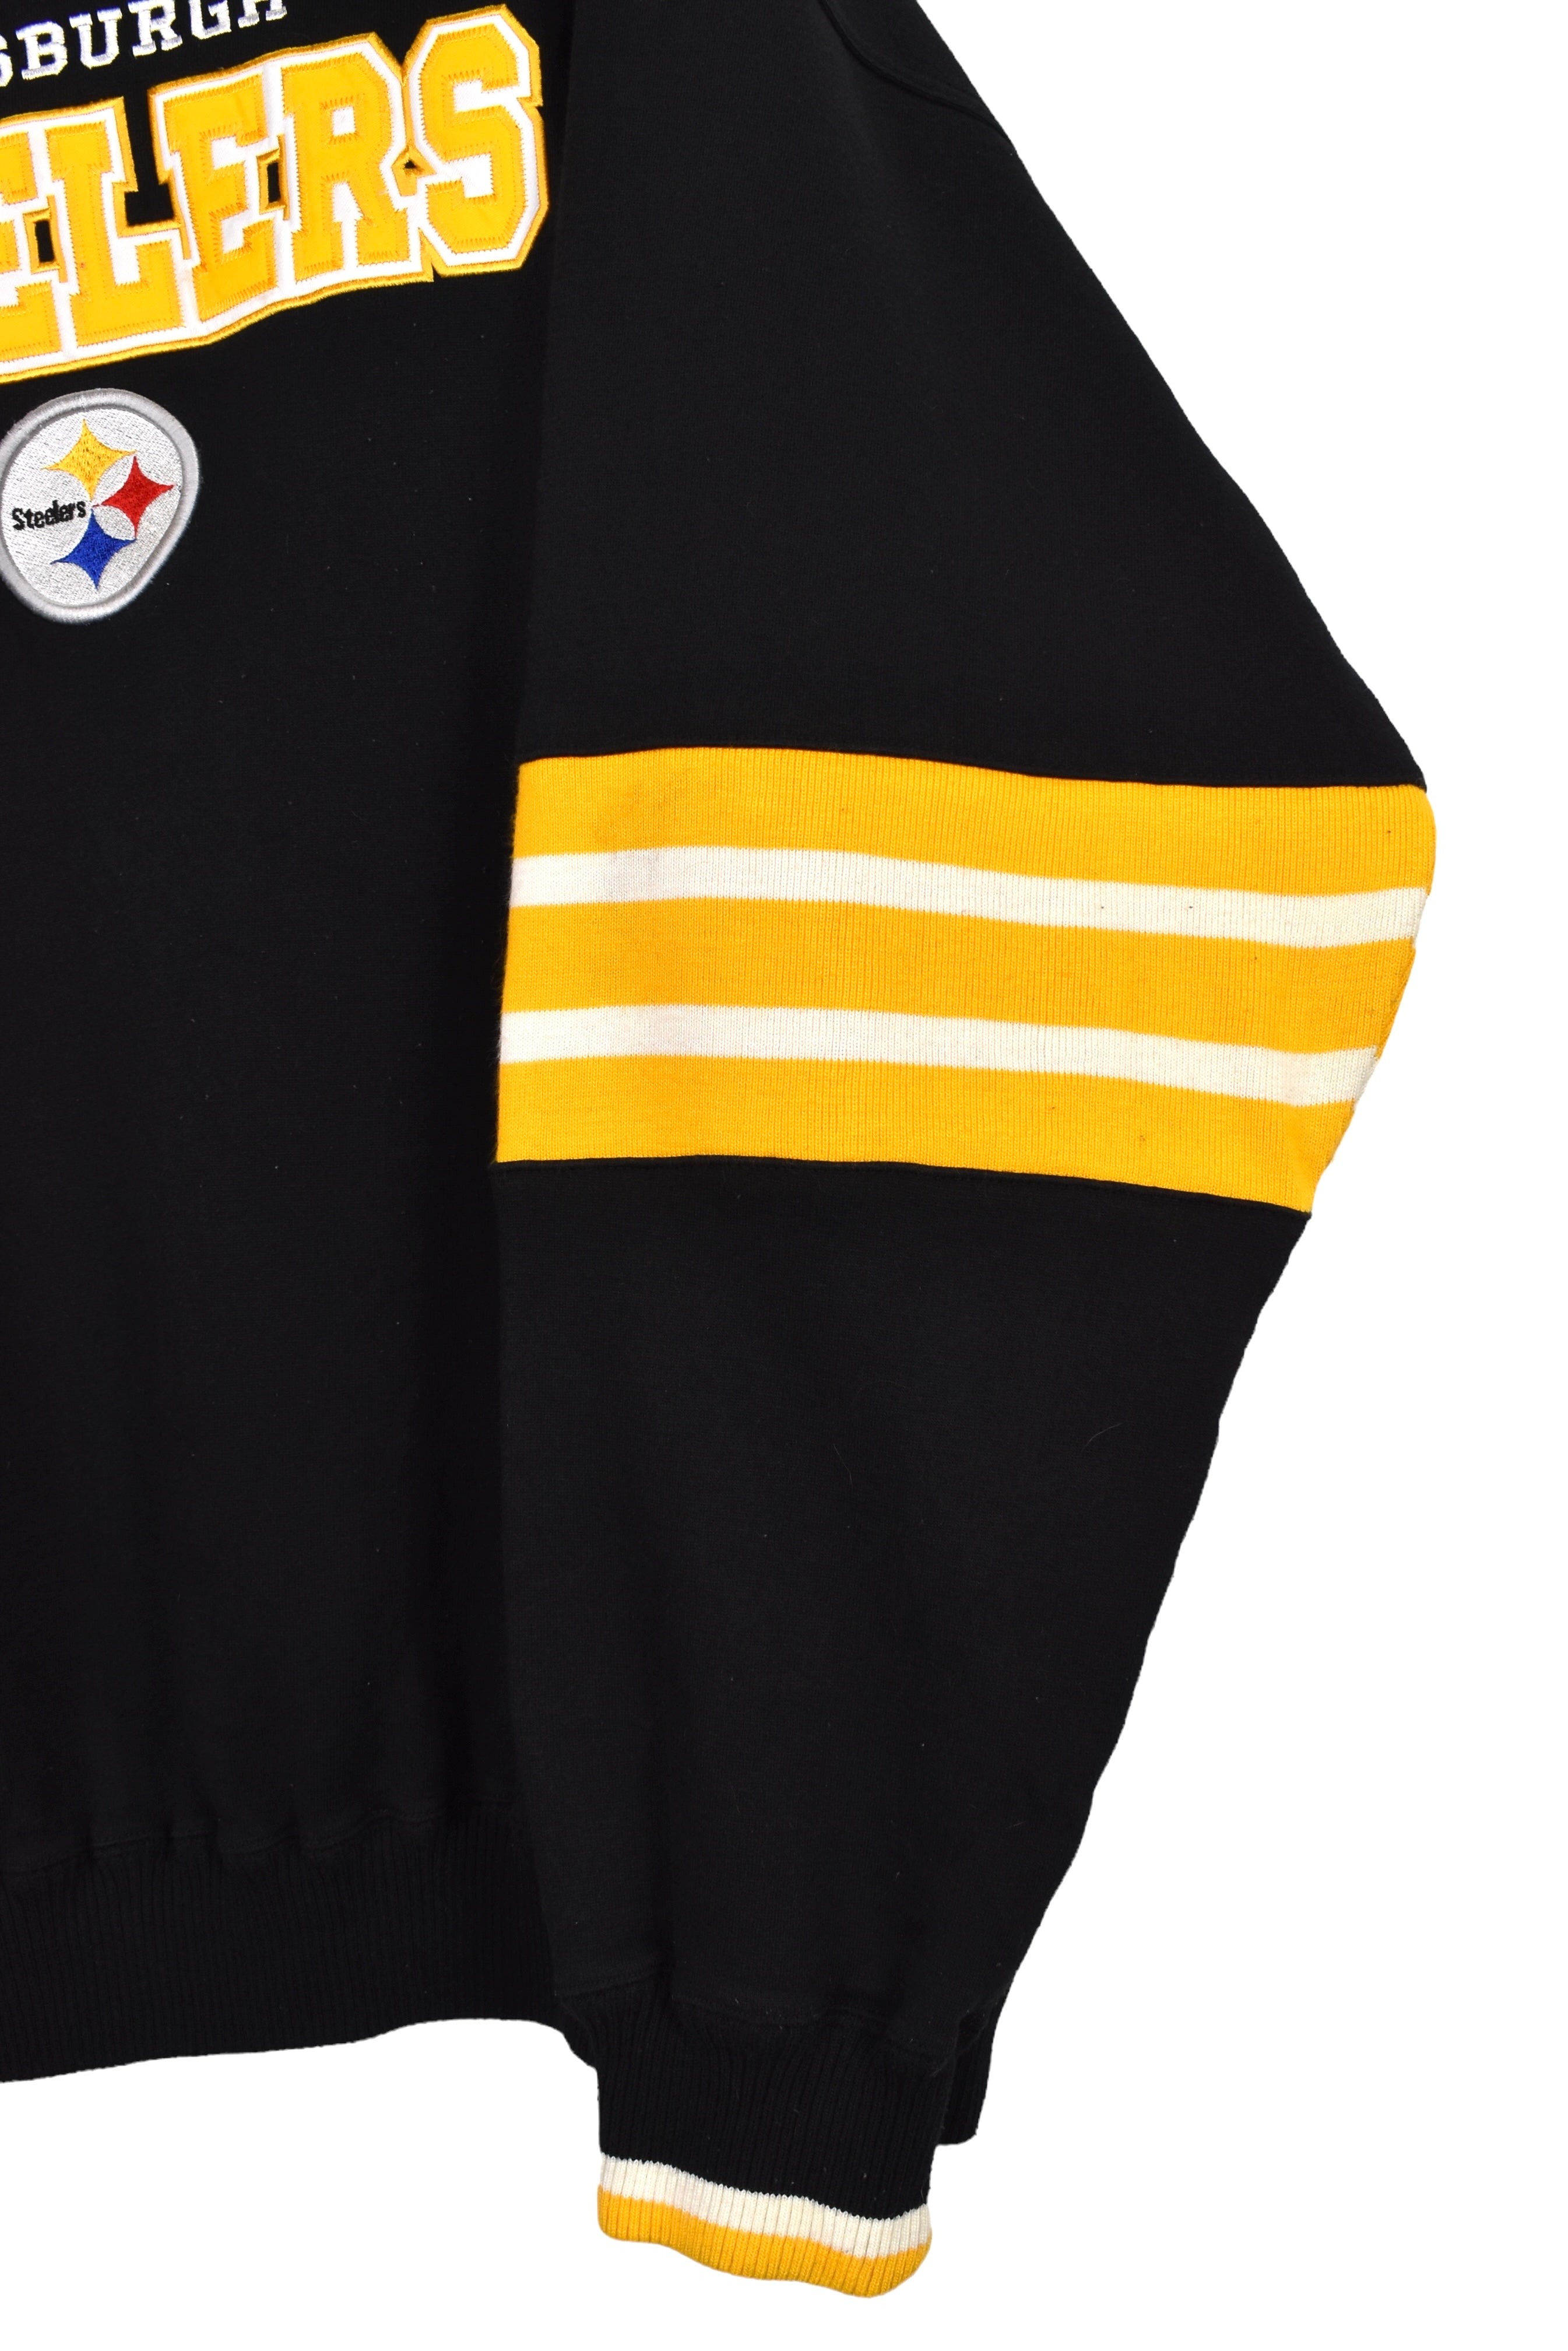 Vintage Pittsburgh Steelers sweatshirt (2XL), black NFL embroidered crewneck